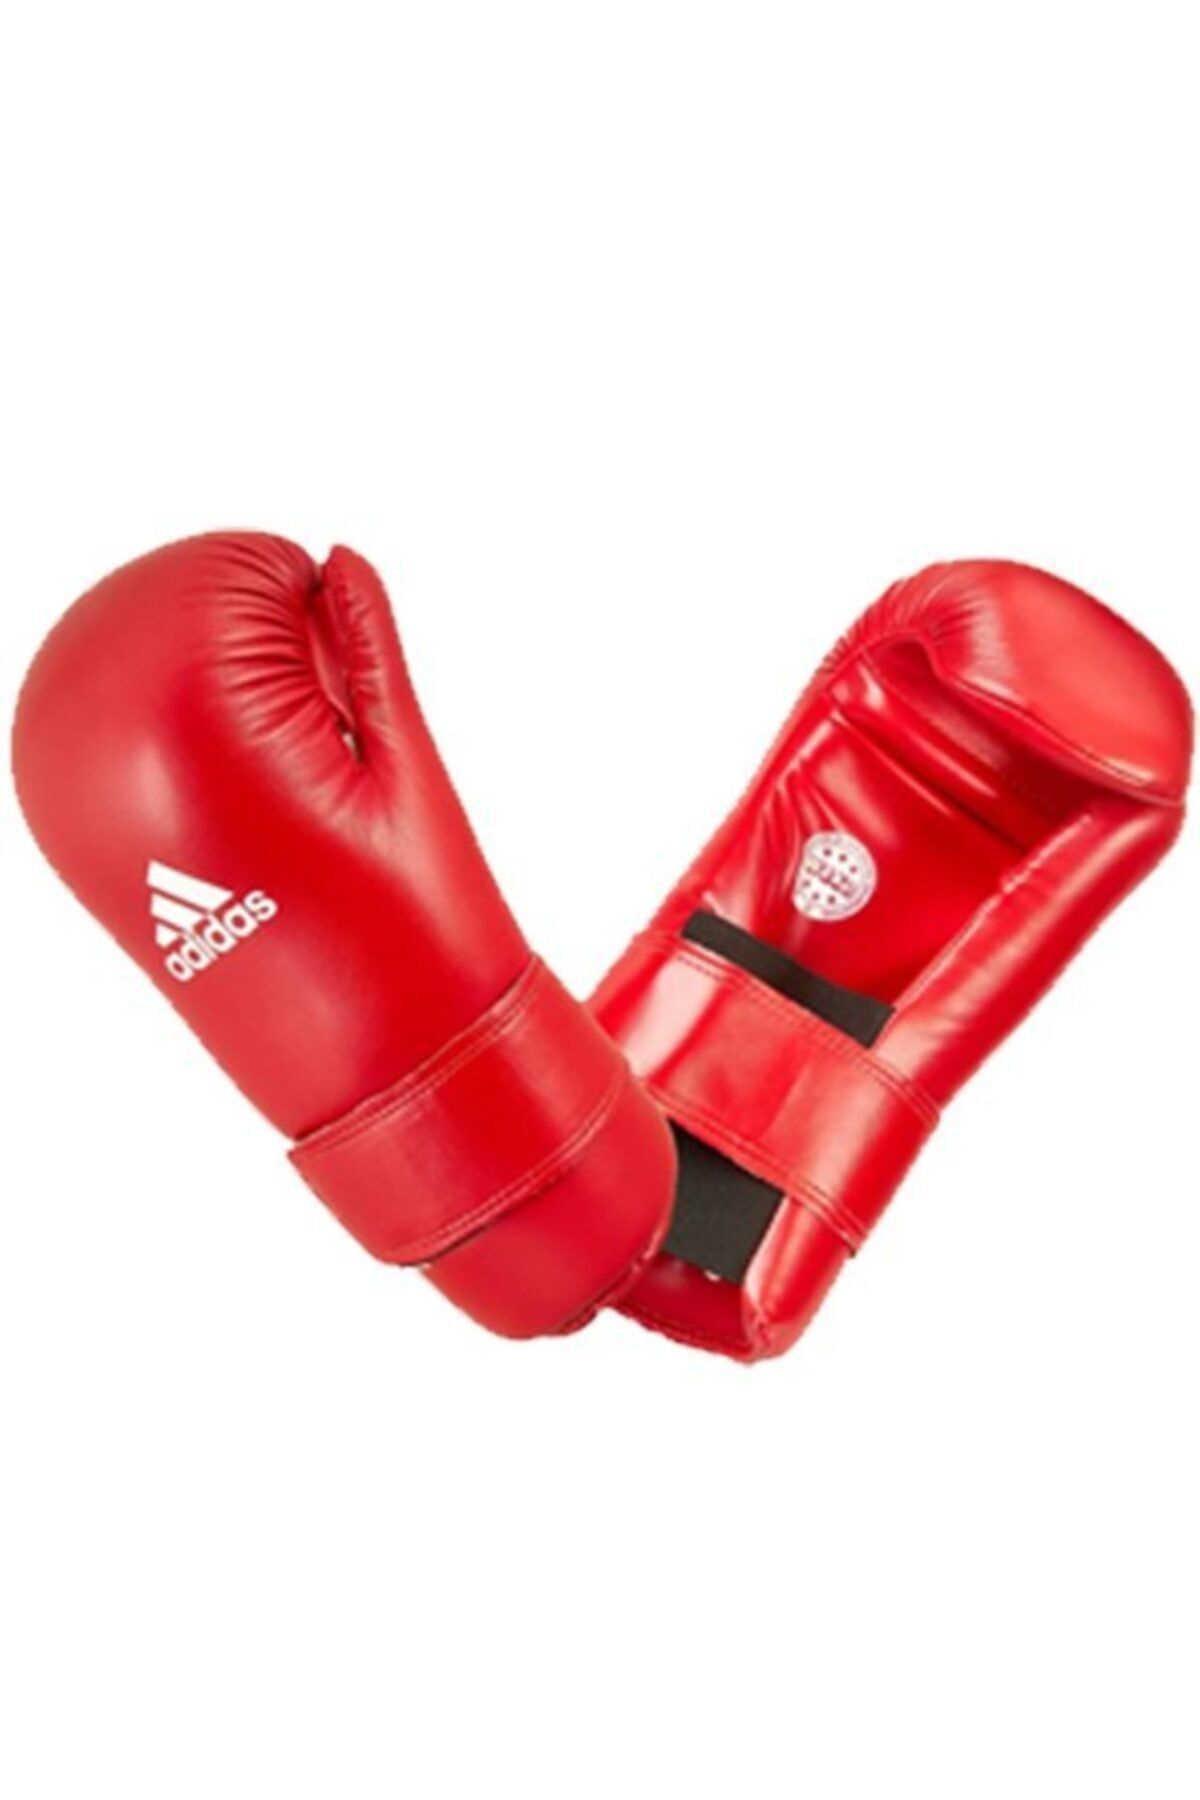 adidas Wako Onaylı Kickboks Semi Contact Eldiveni Point Fight Eldiveni Kickboxing Gloves Adıwakog3